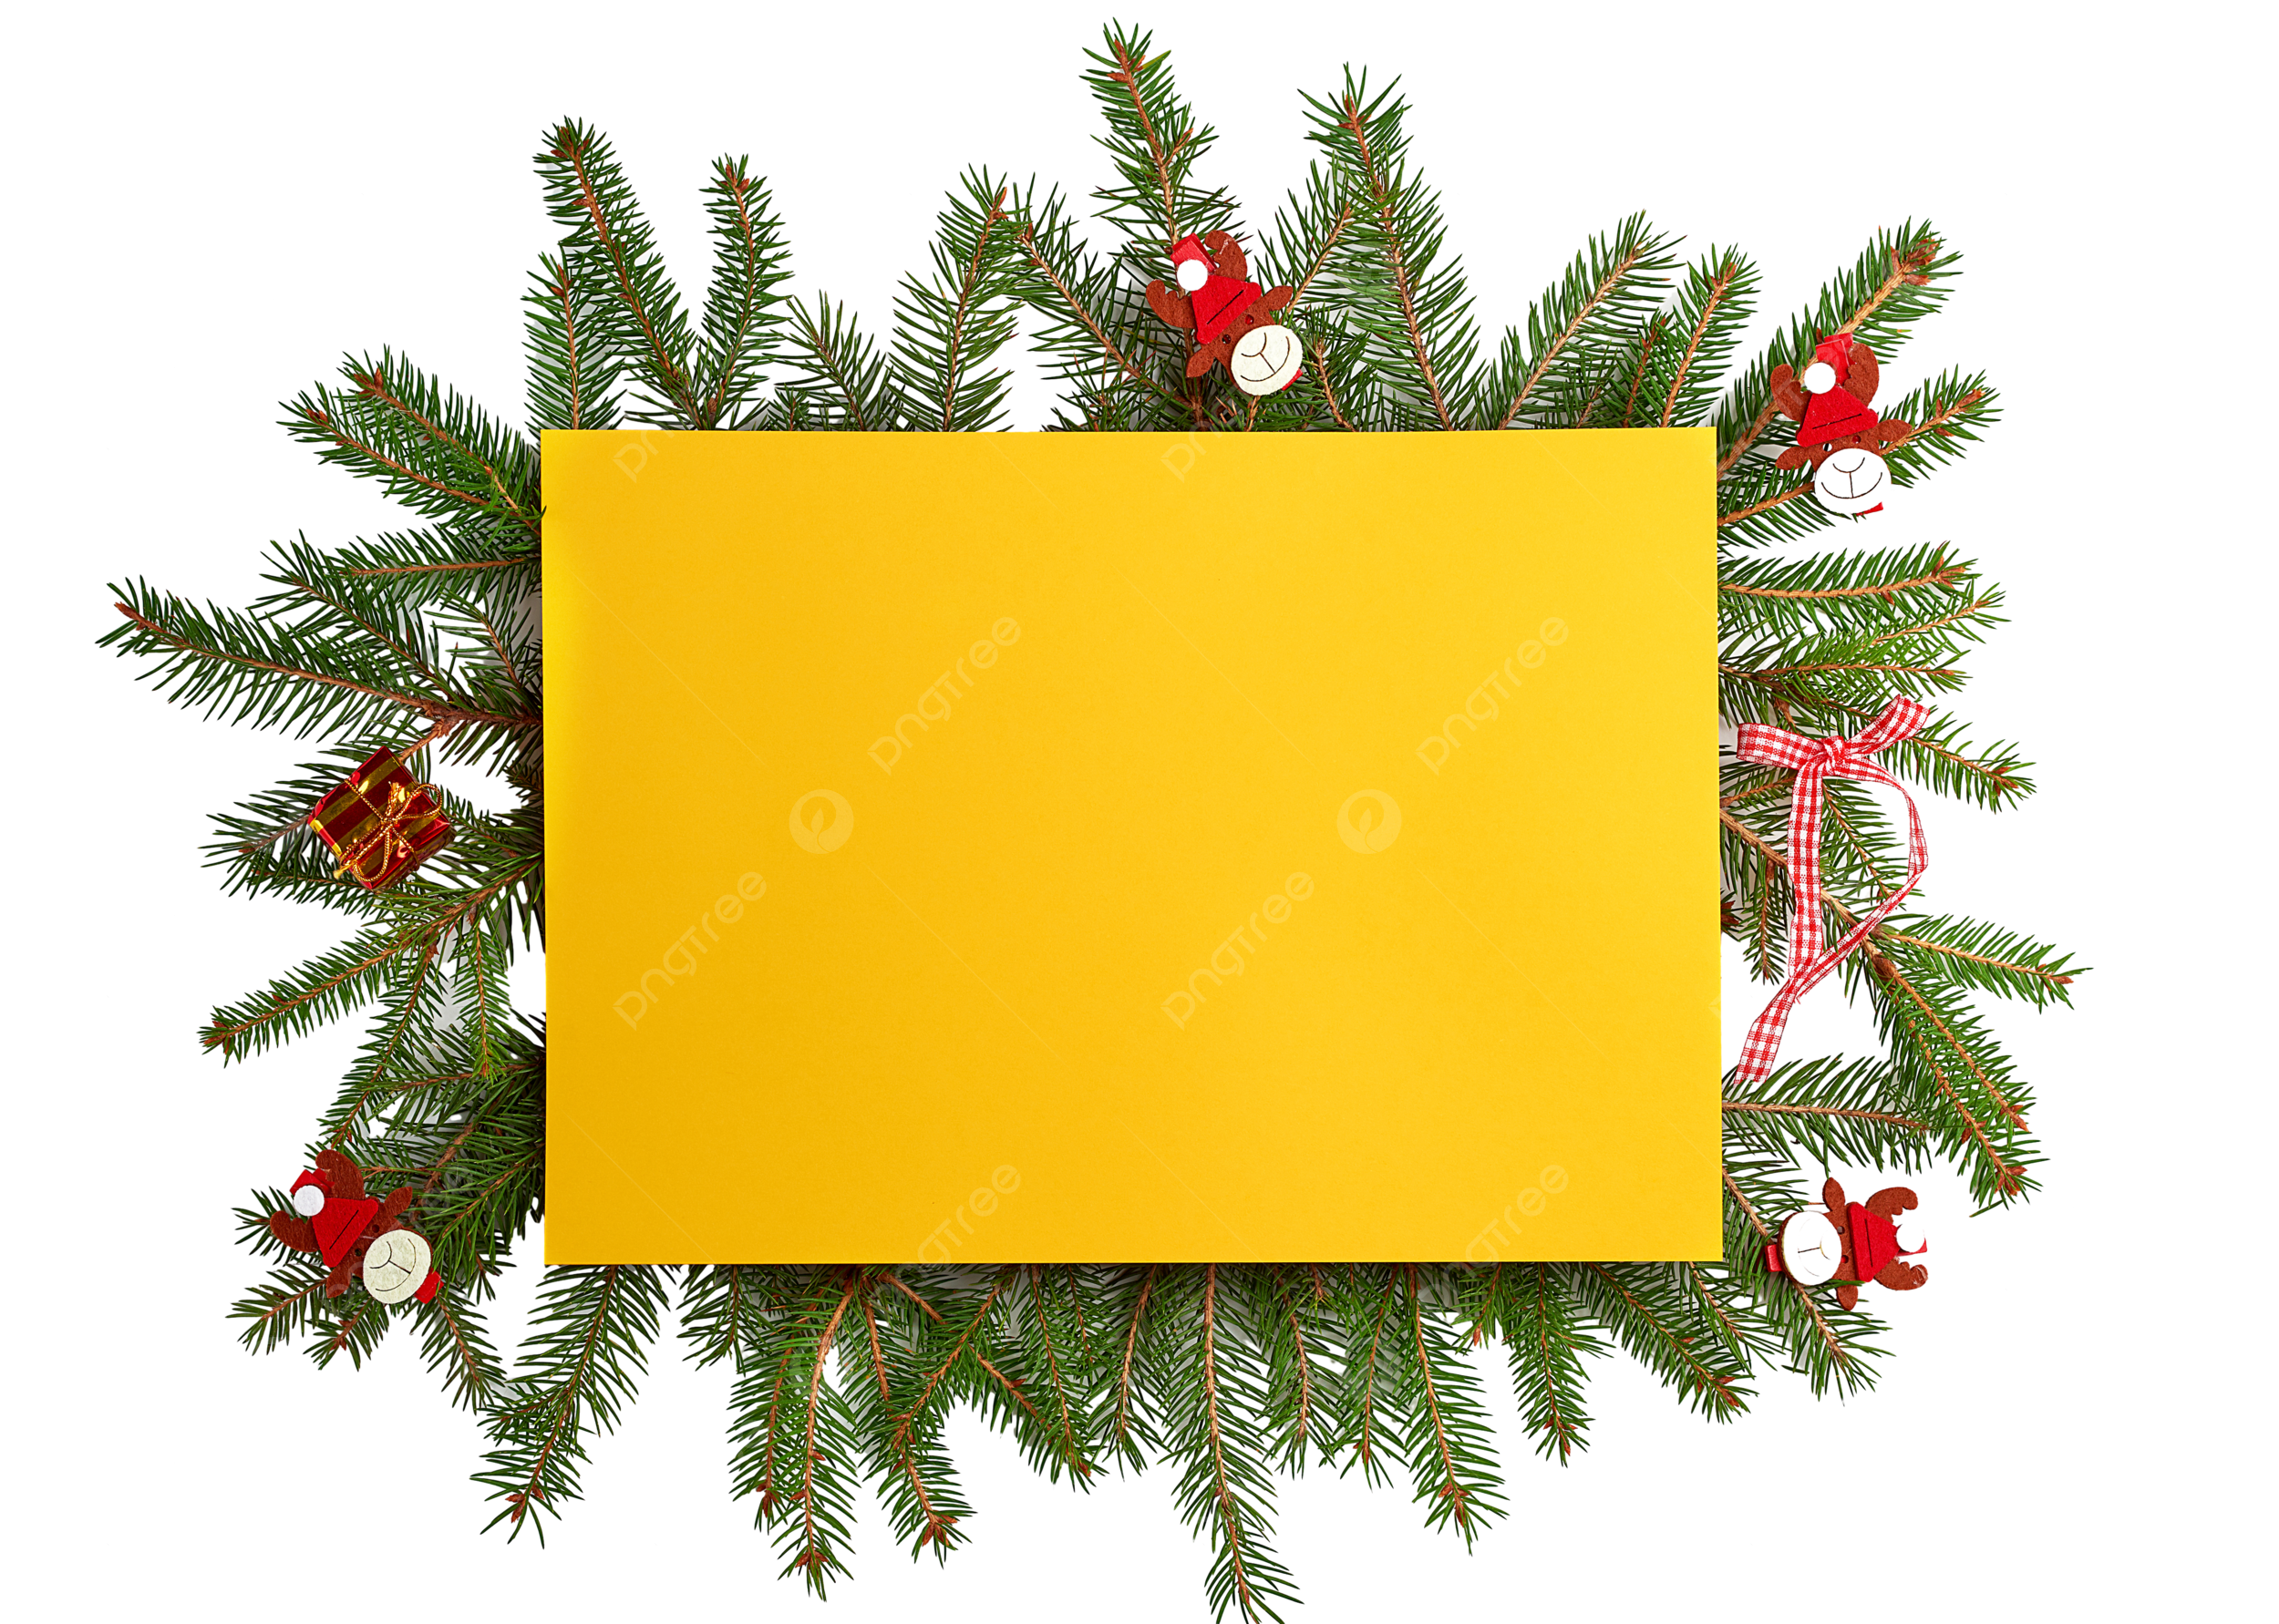 Hoja amarilla vacãa en una felicitaciãn navideãa ftiva png dibujos copie el pacio tarjeta postal temporada png imagen para dcarga gratuita